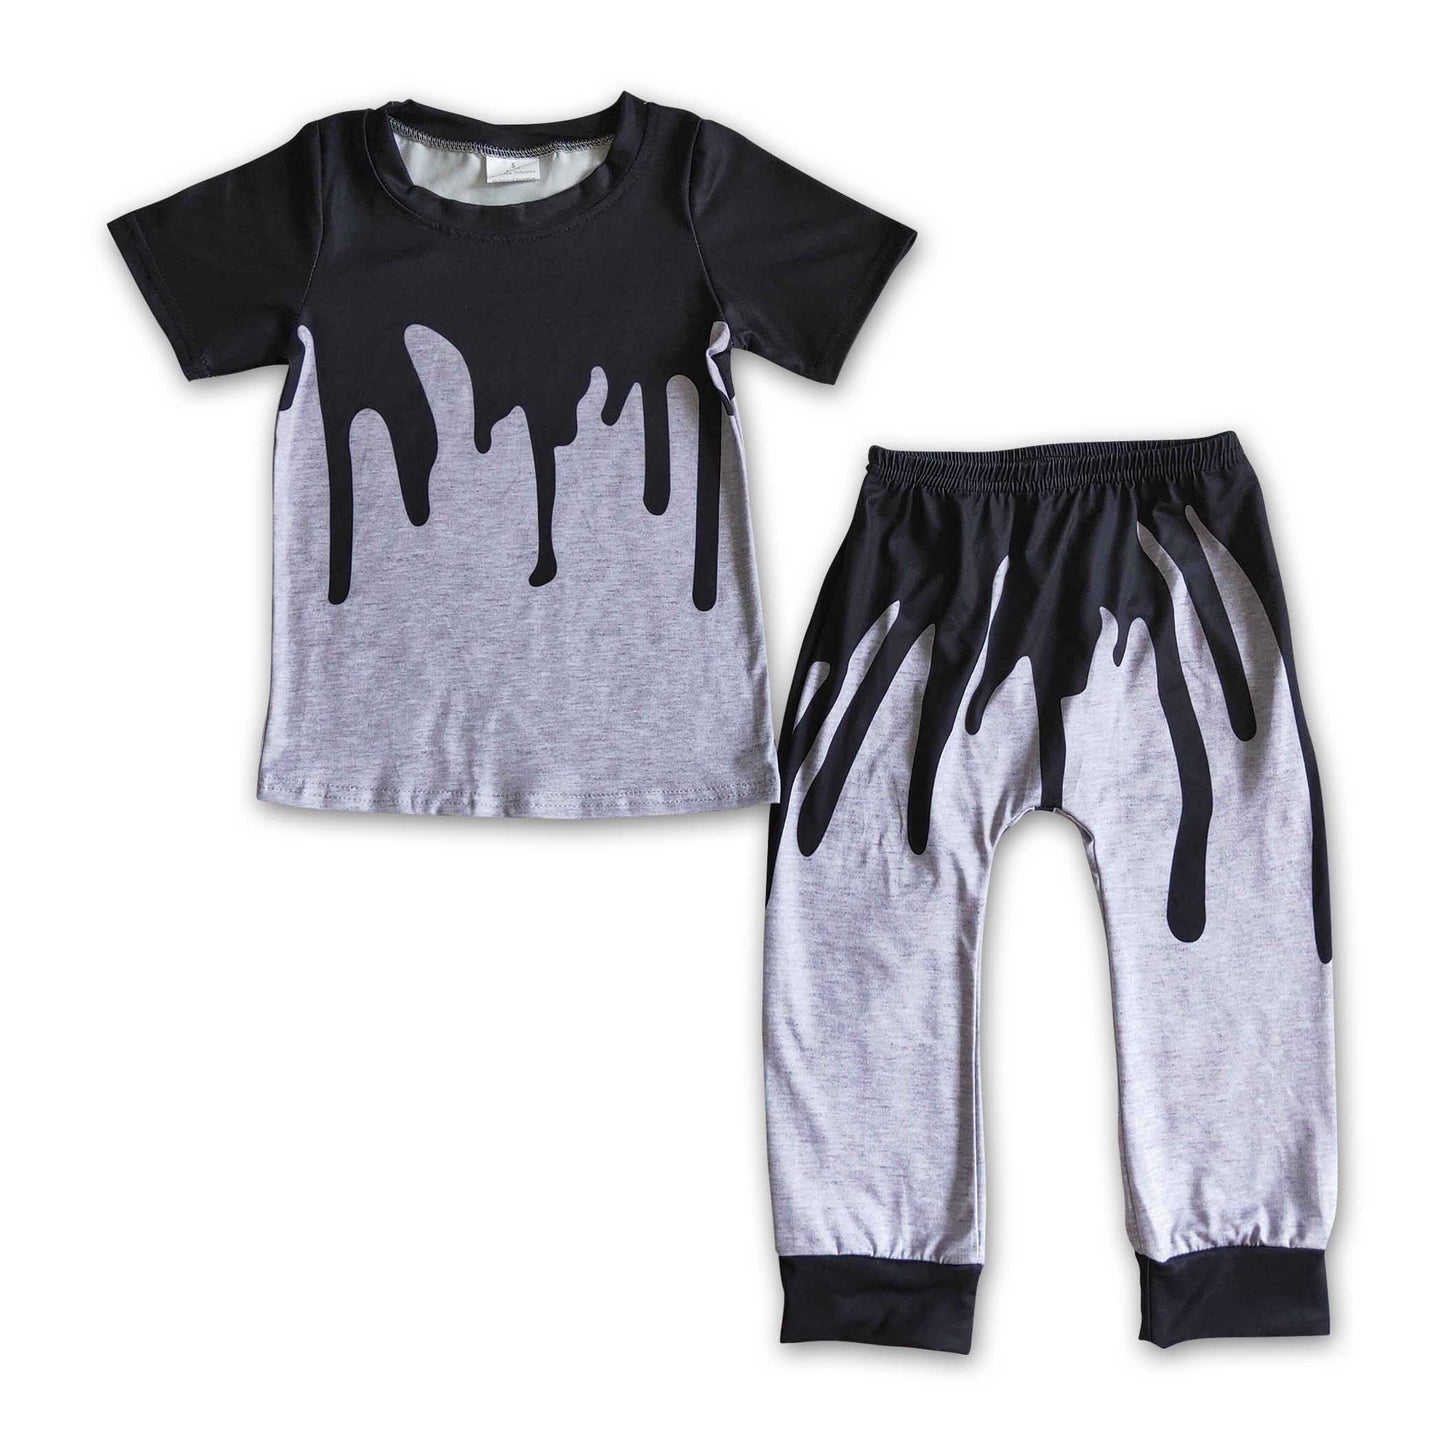 Grey black short sleeve boy Halloween clothing set